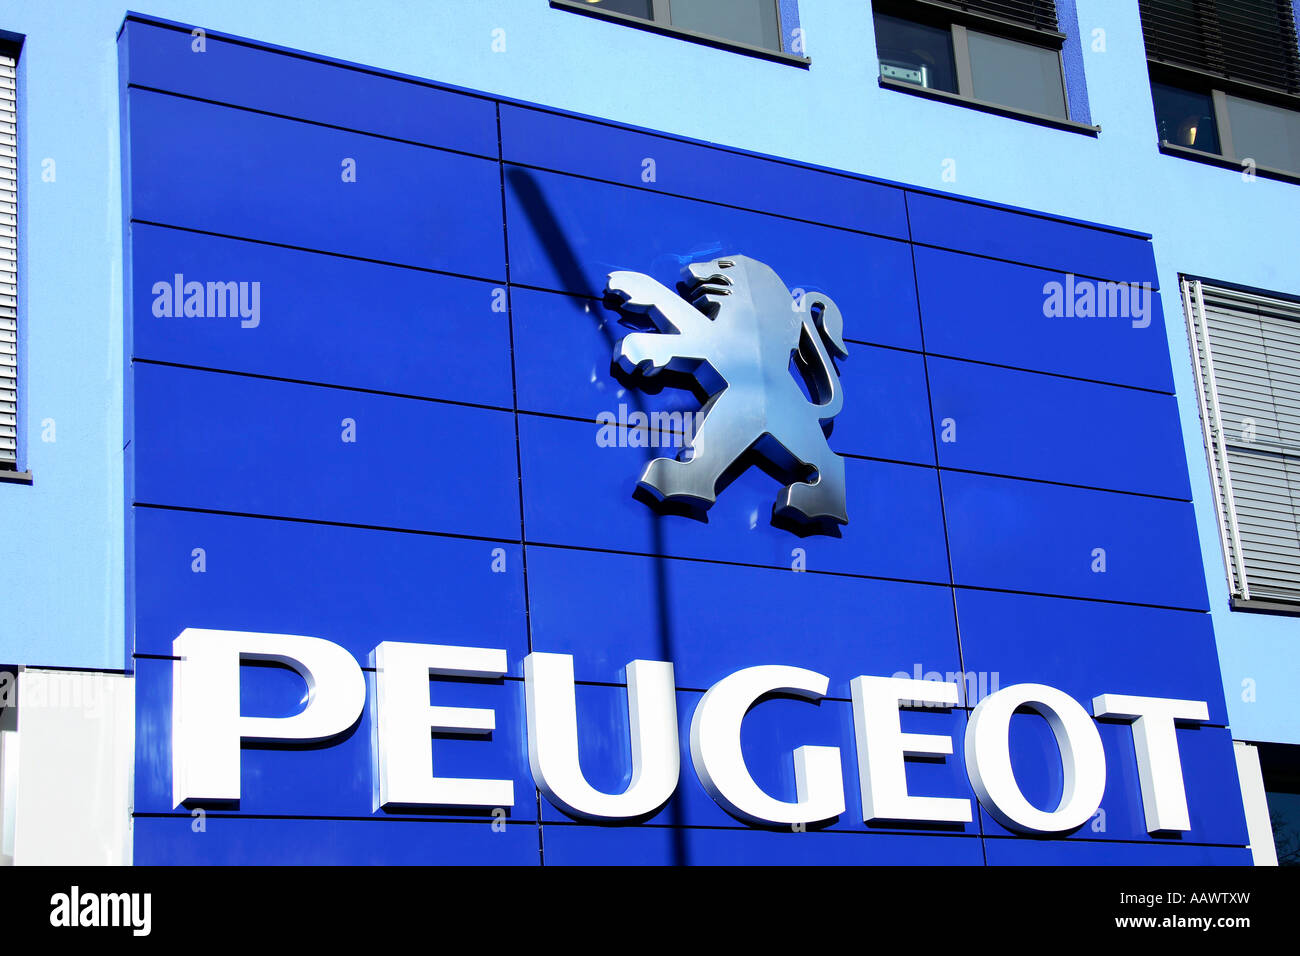 Peugeot auto maker company sign Stock Photo